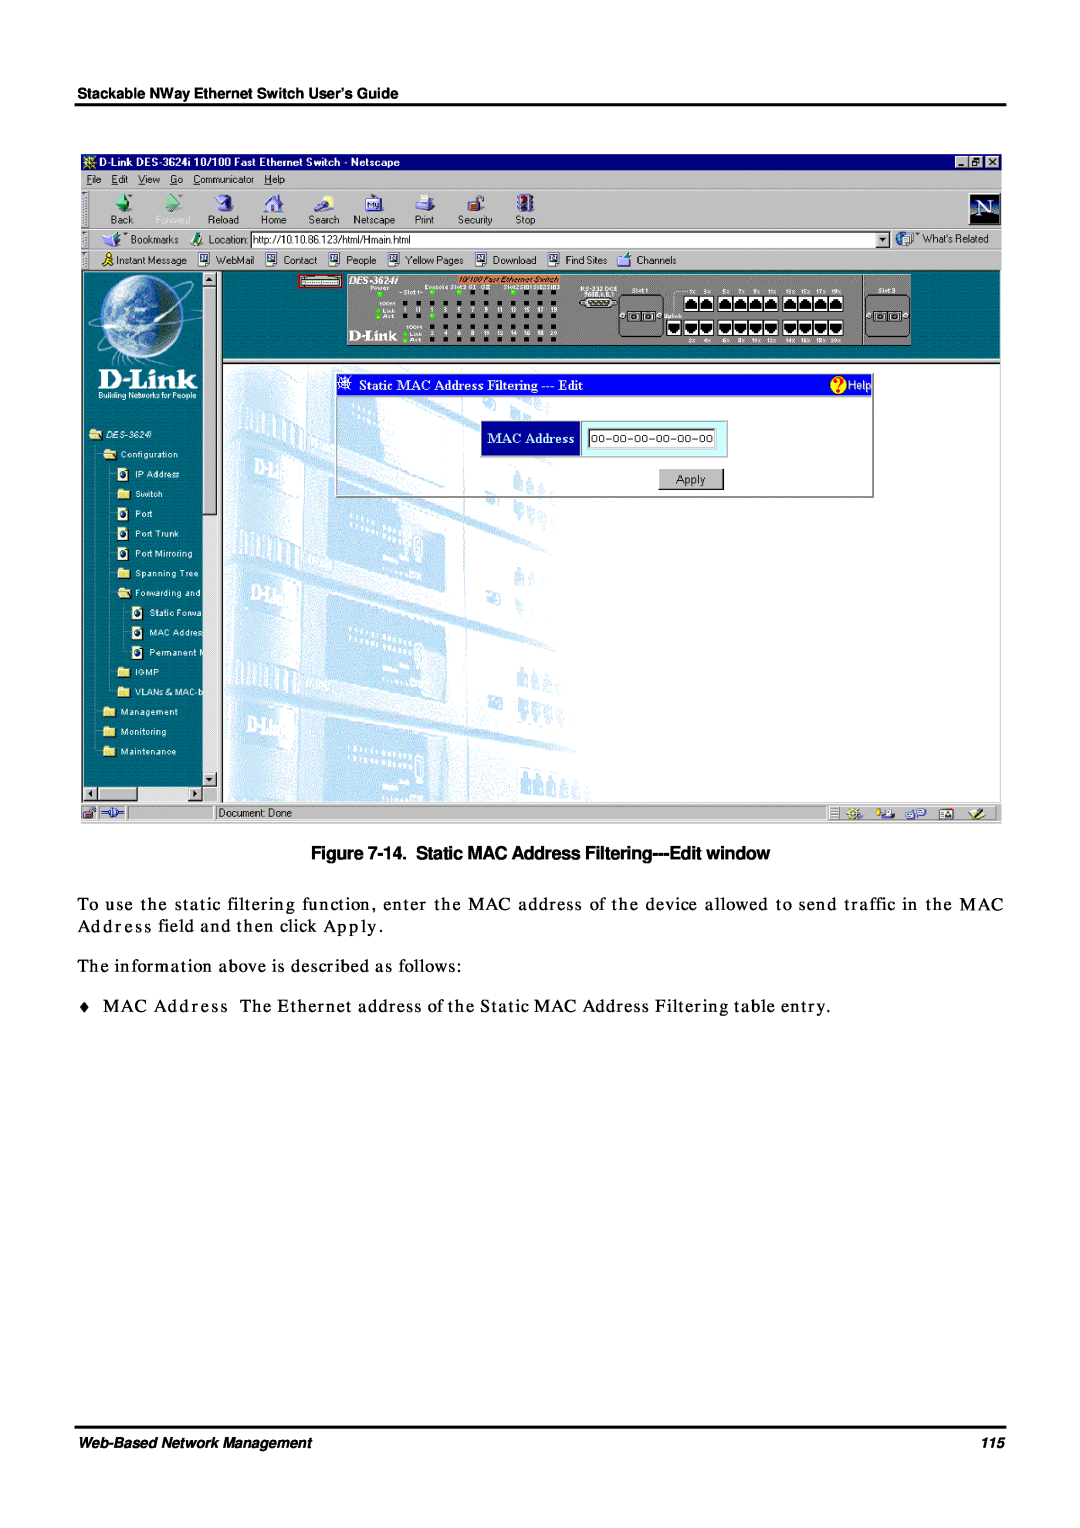 D-Link DES-3624 manual 14. Static MAC Address Filtering---Edit window 